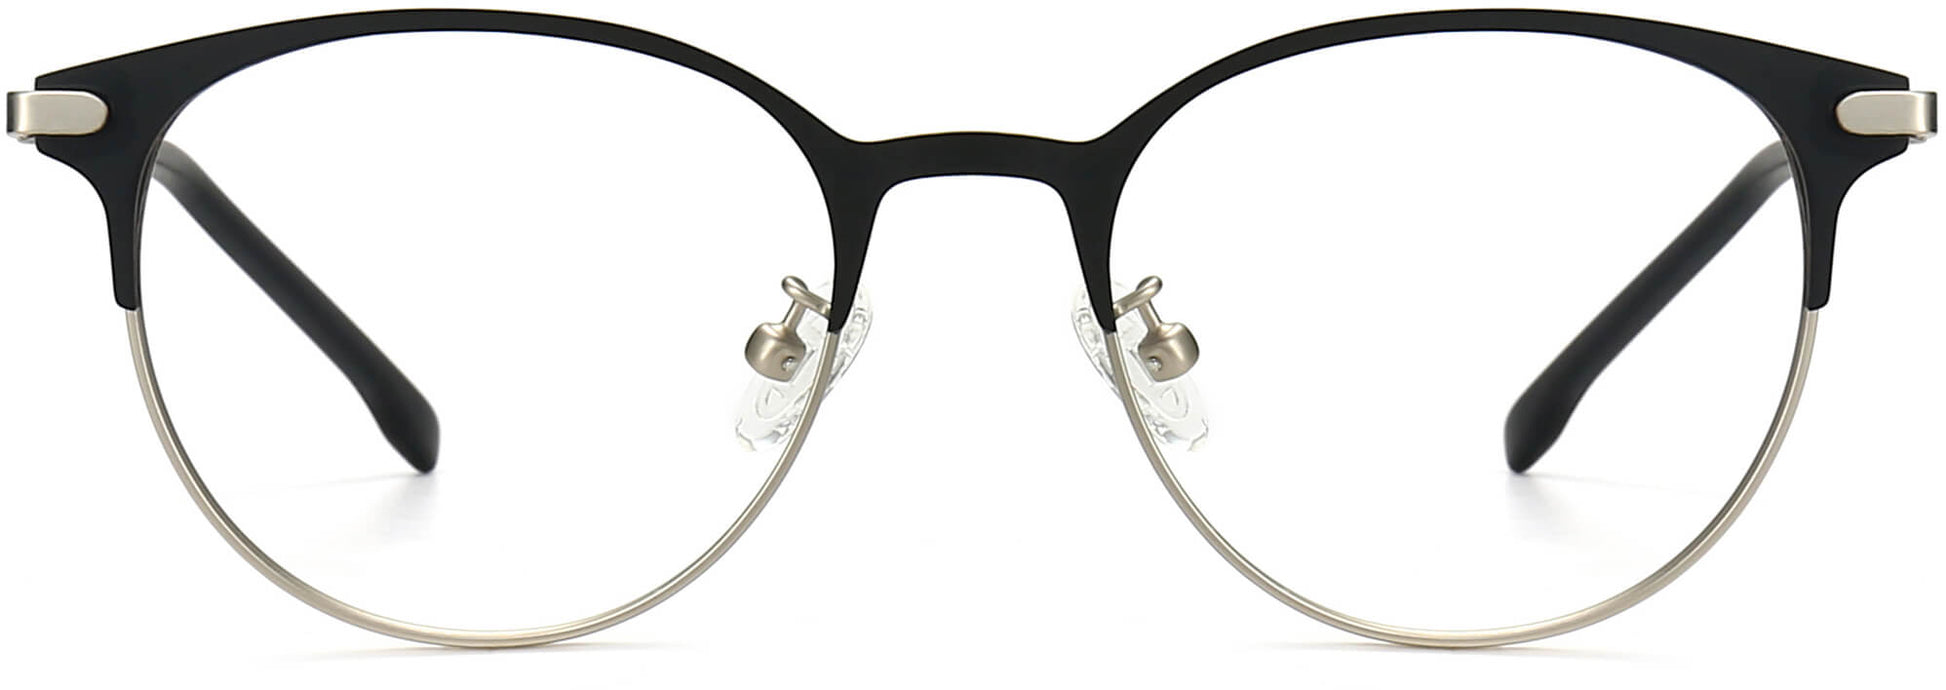 Julio Round Black Eyeglasses from ANRRI, front view